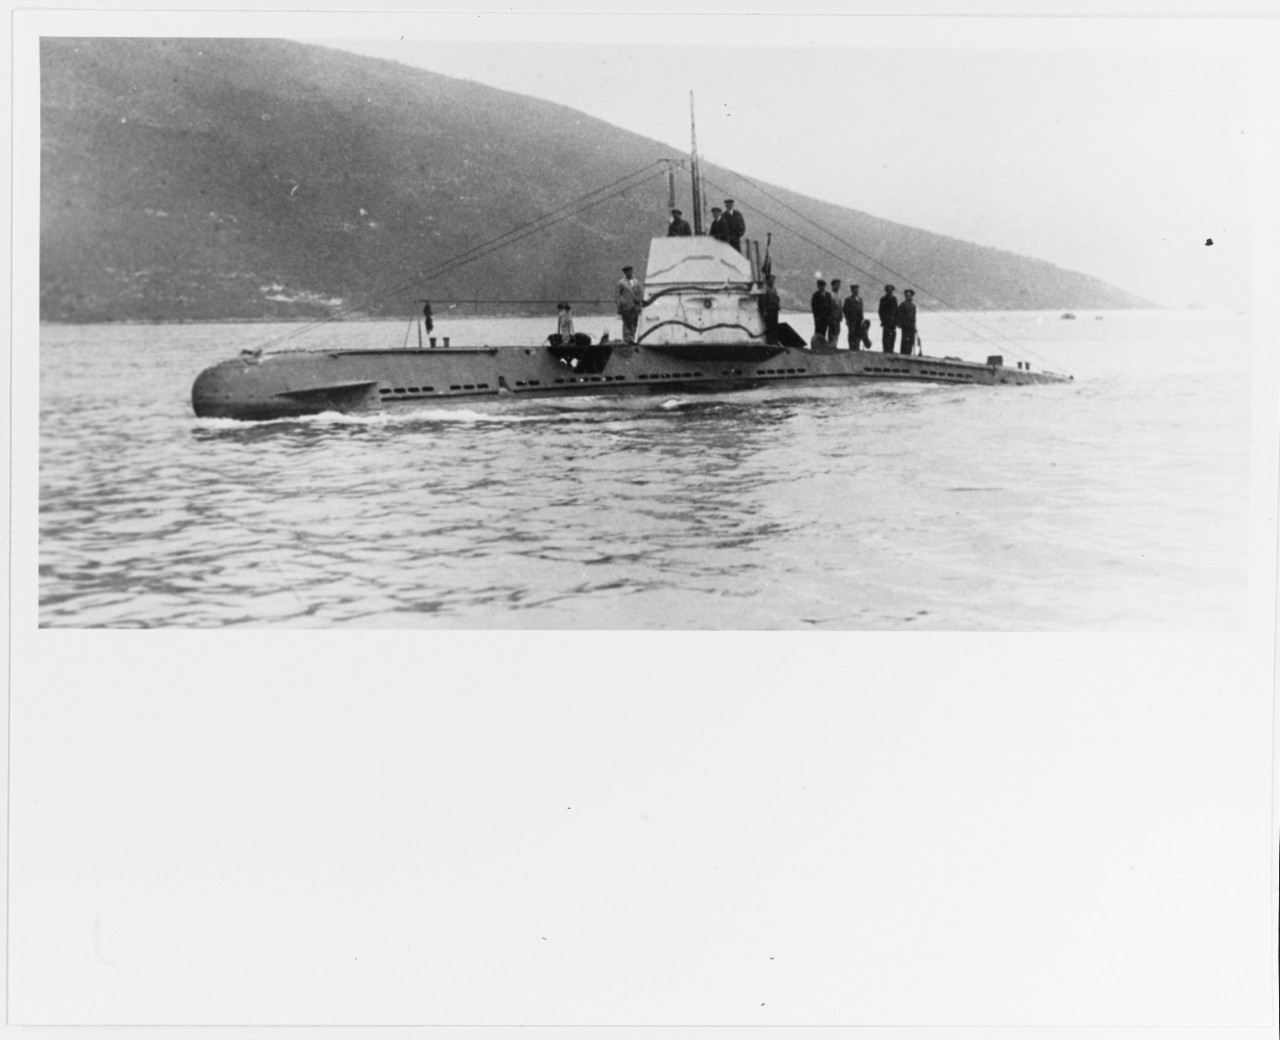 U-16 (Austrian Submarine, 1915-1916)